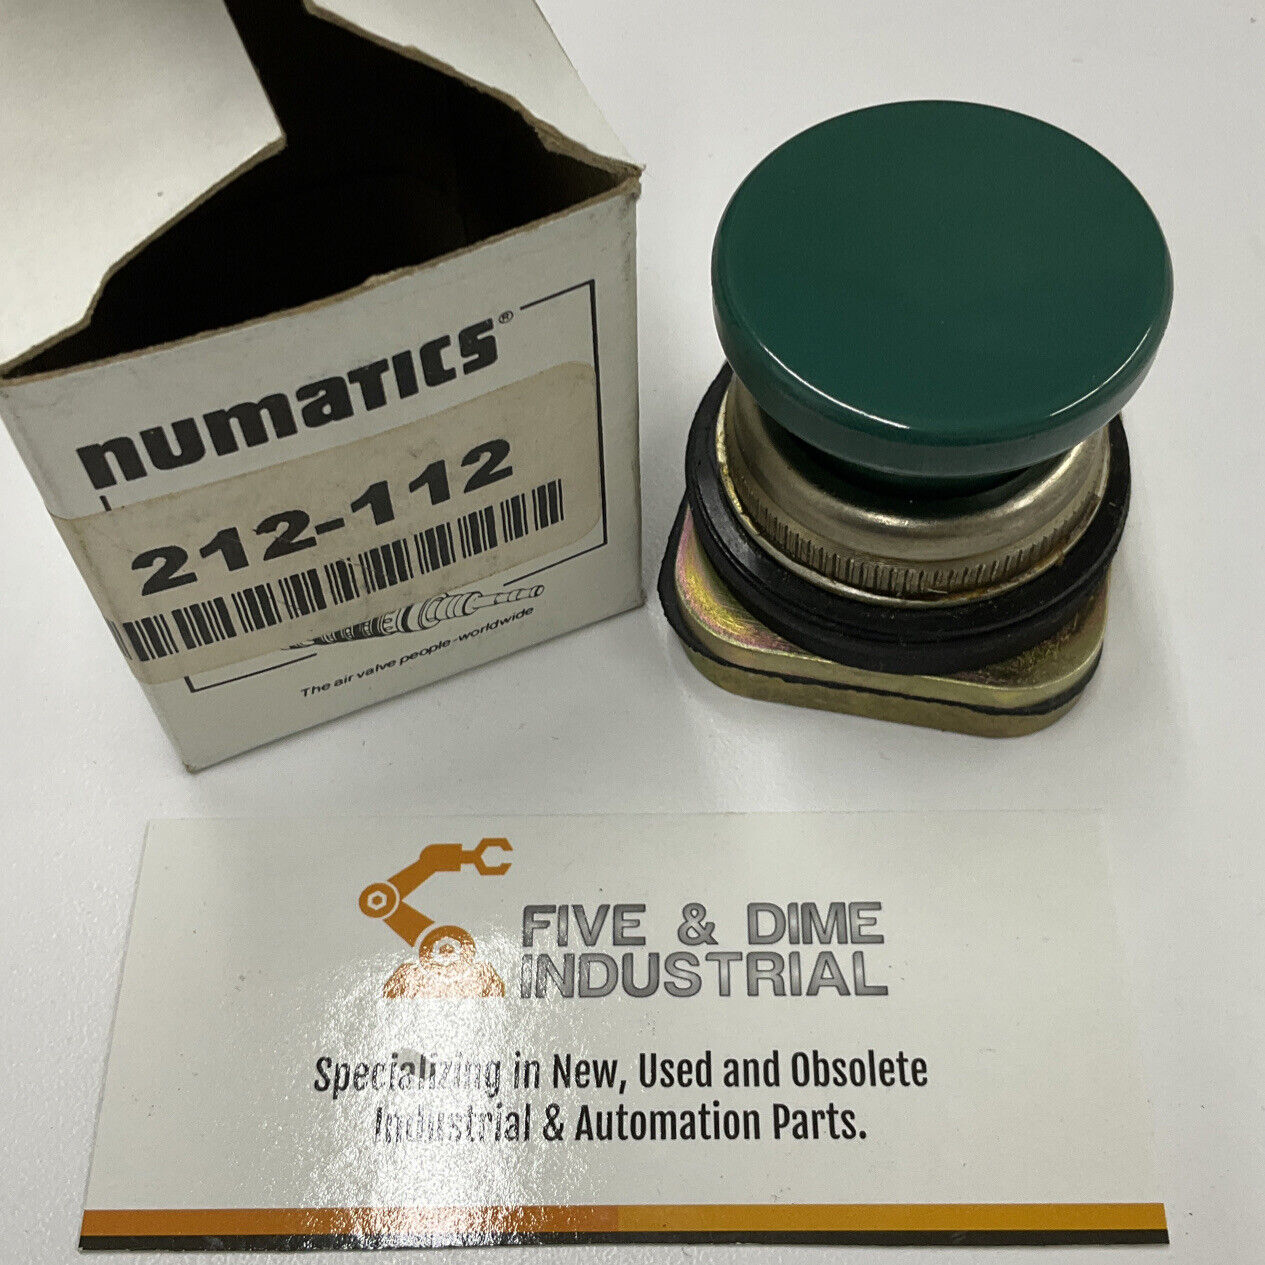 Numatics 212-112 New Green Mushroom Button Assembly  (YE144)